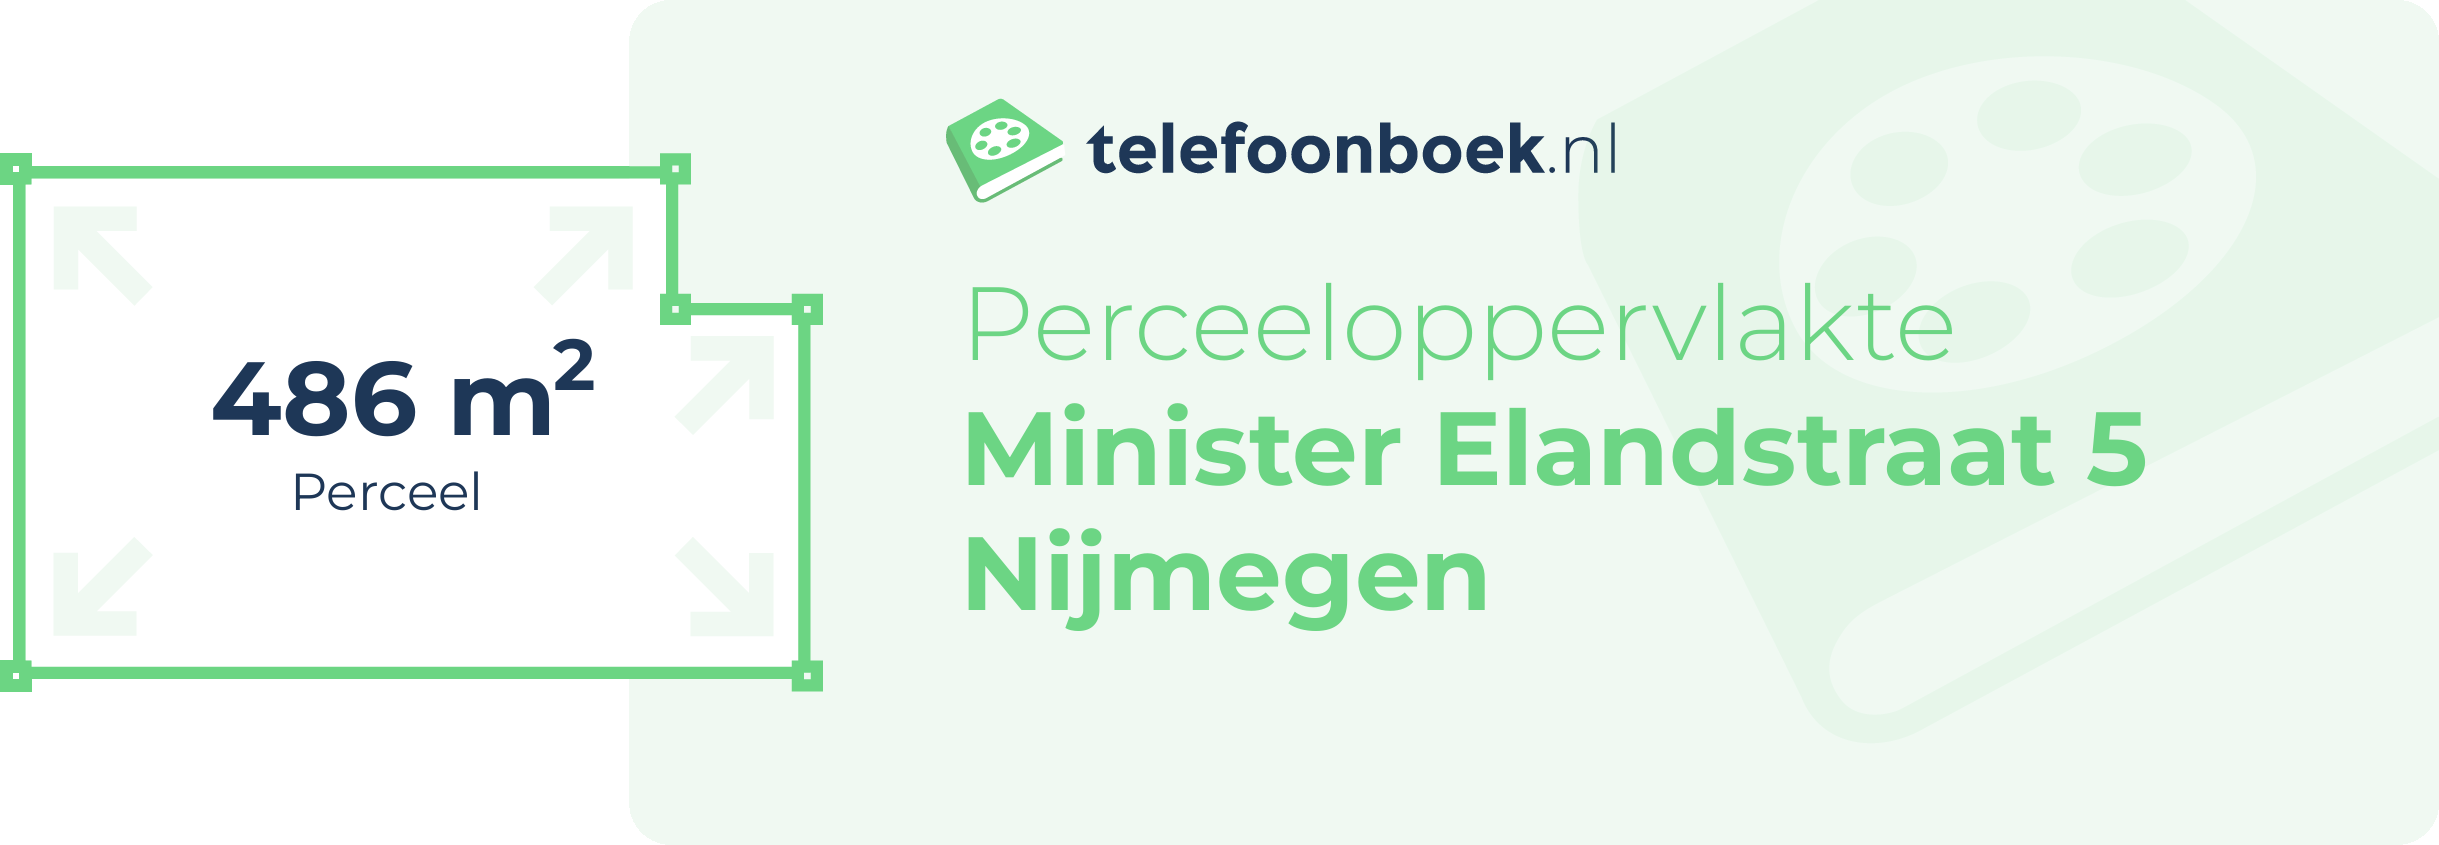 Perceeloppervlakte Minister Elandstraat 5 Nijmegen